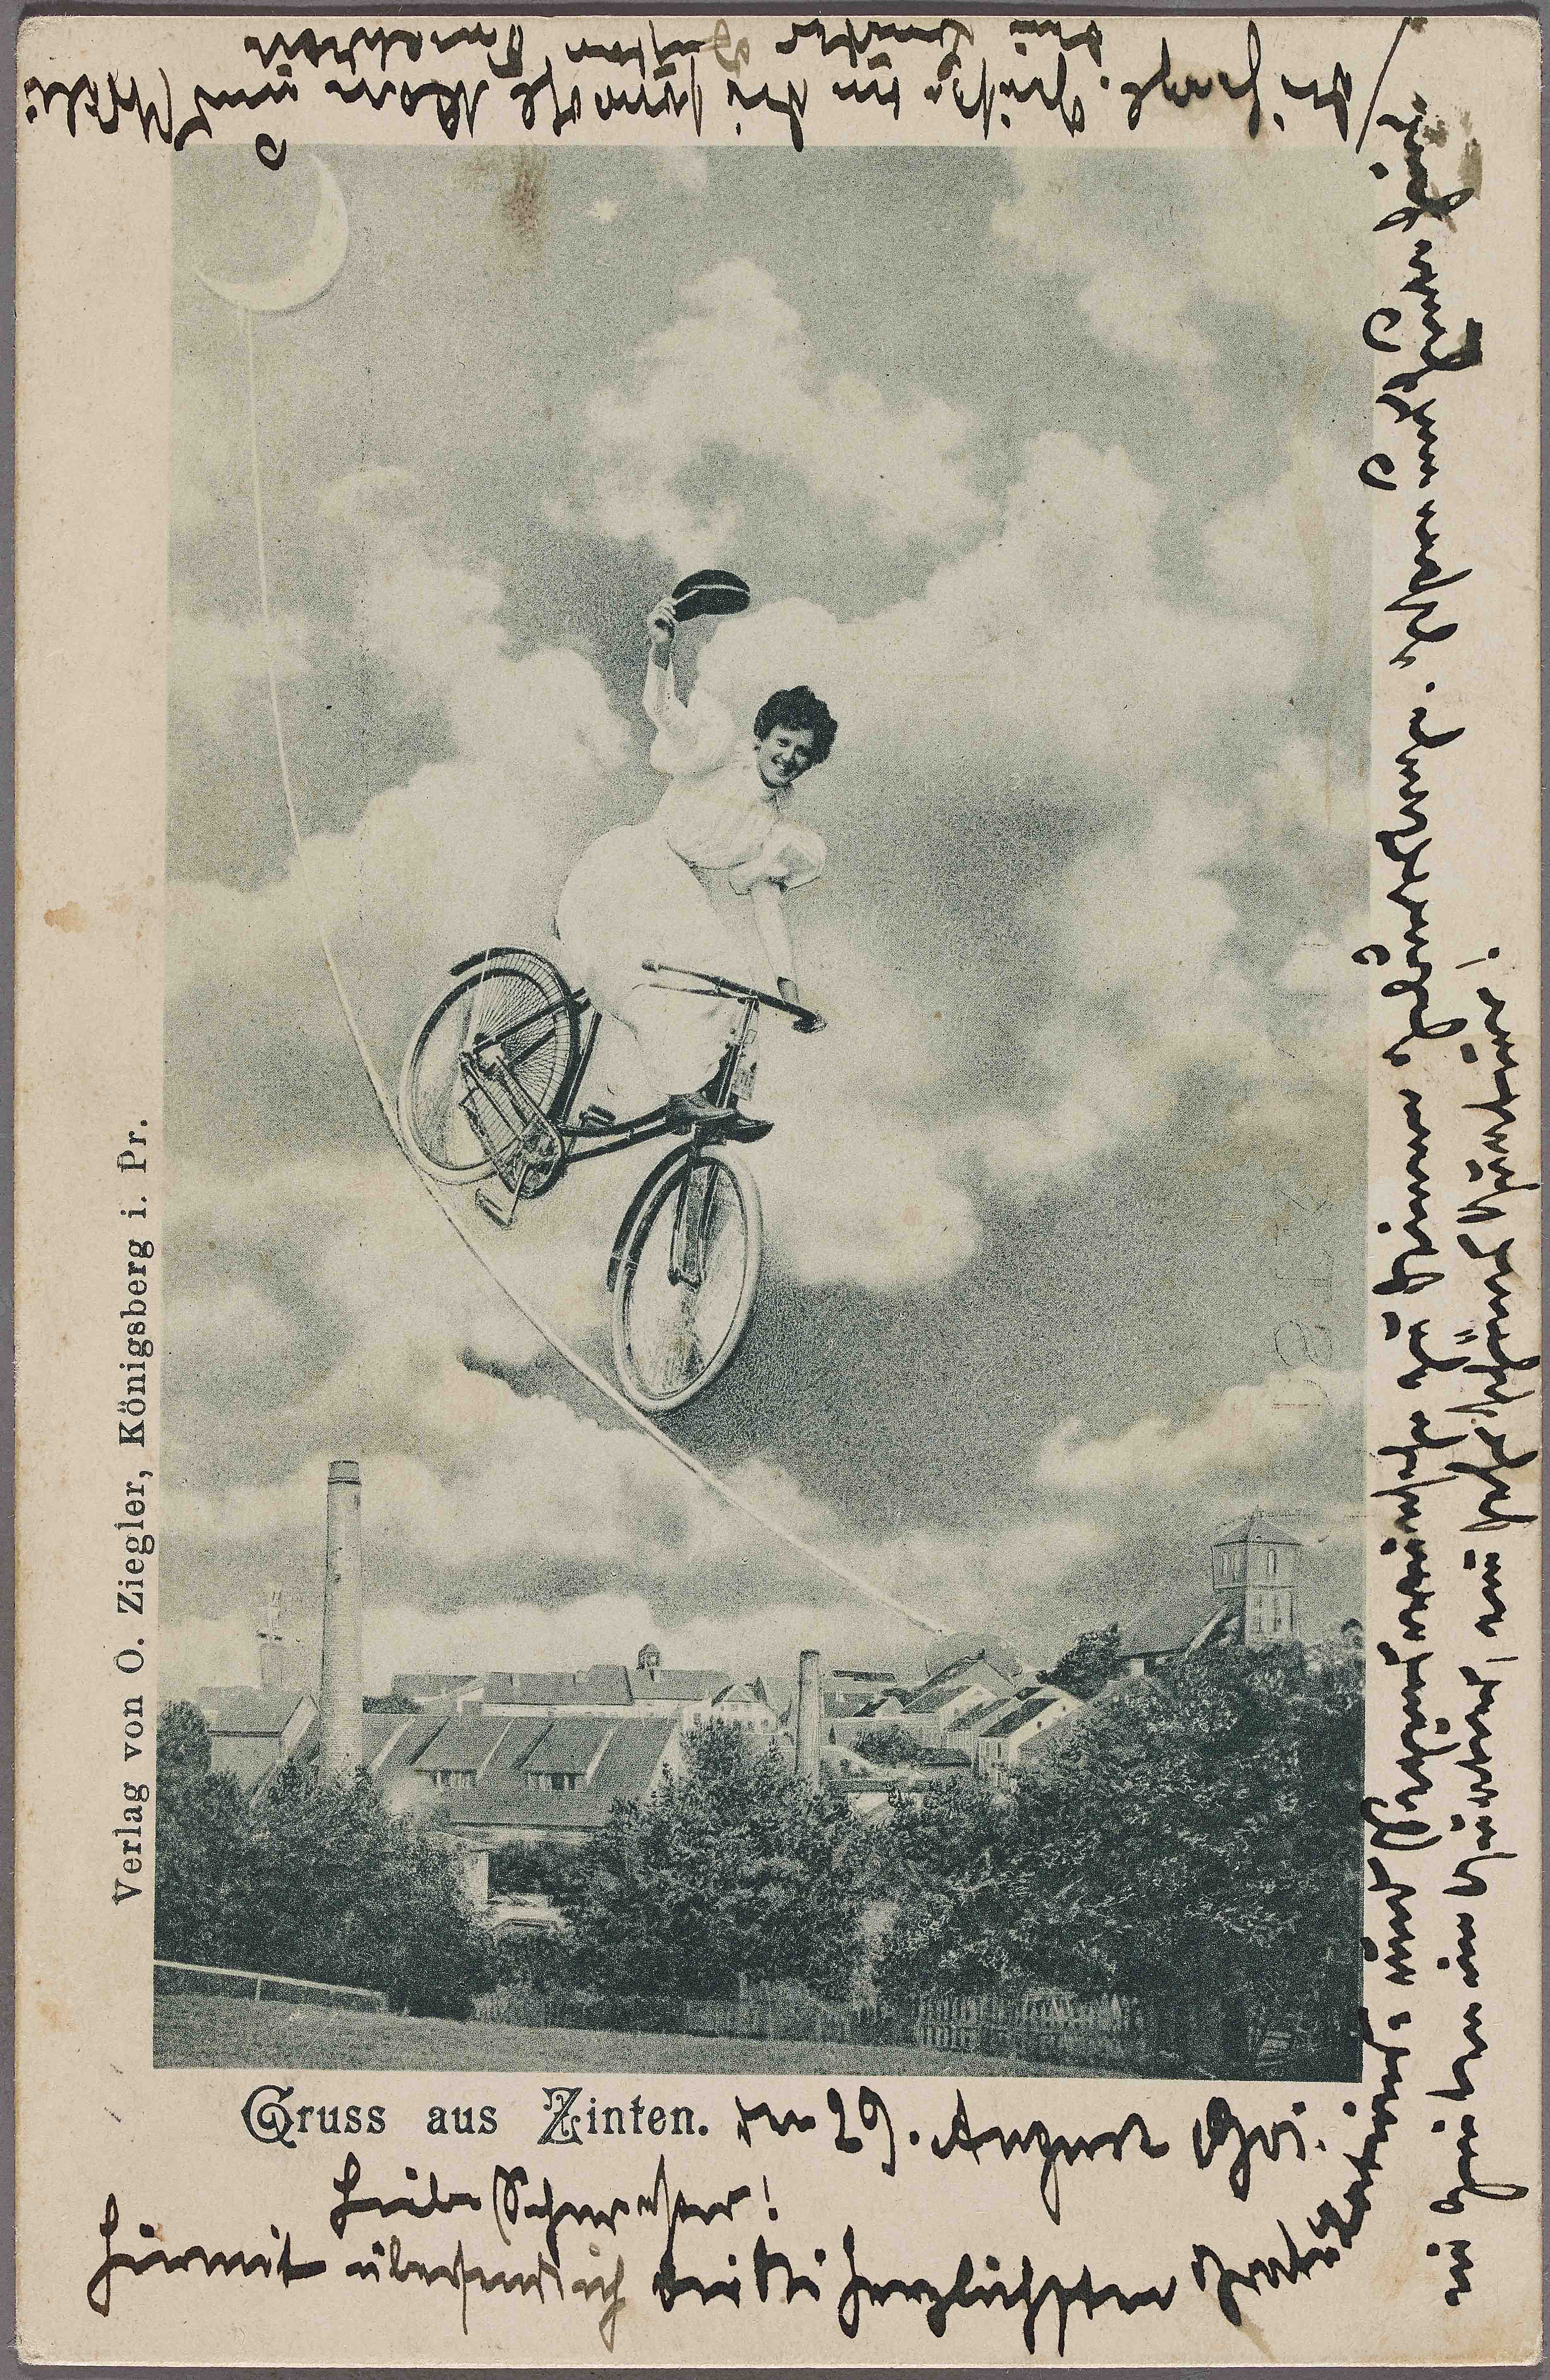 Postkarte mit radfahrender Frau, 1901